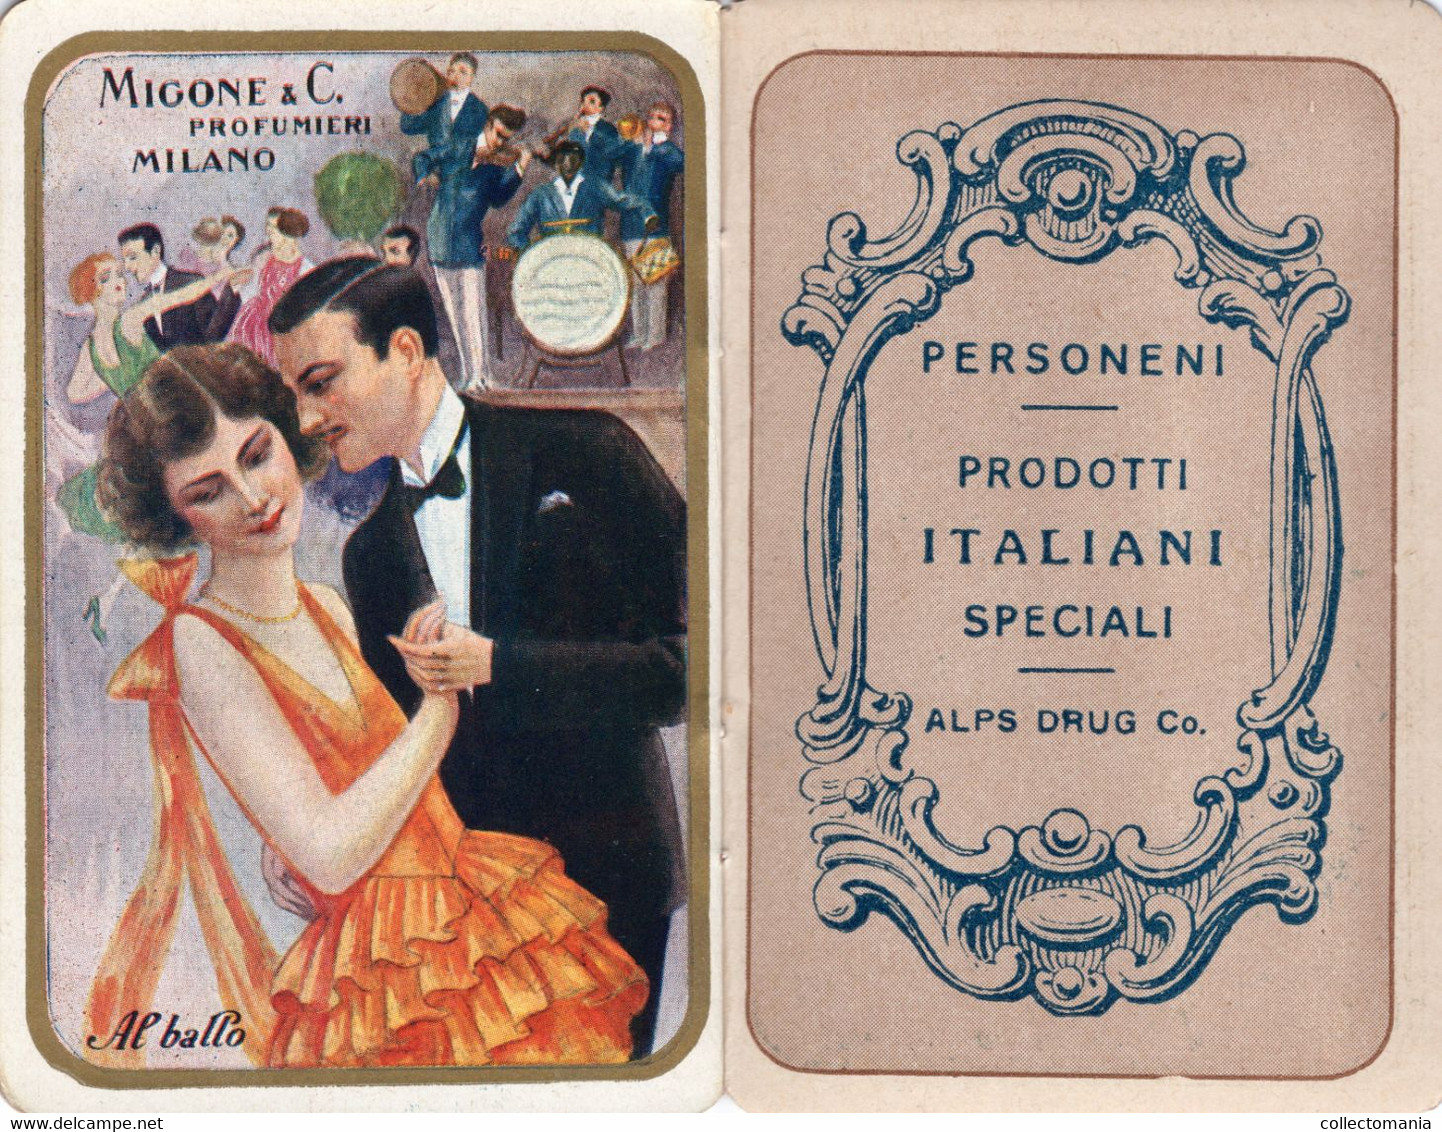 1 Carnet Booklet  PARFUM  Profumo Migone  1930 SPORT Theater Horse races Tennis Casino